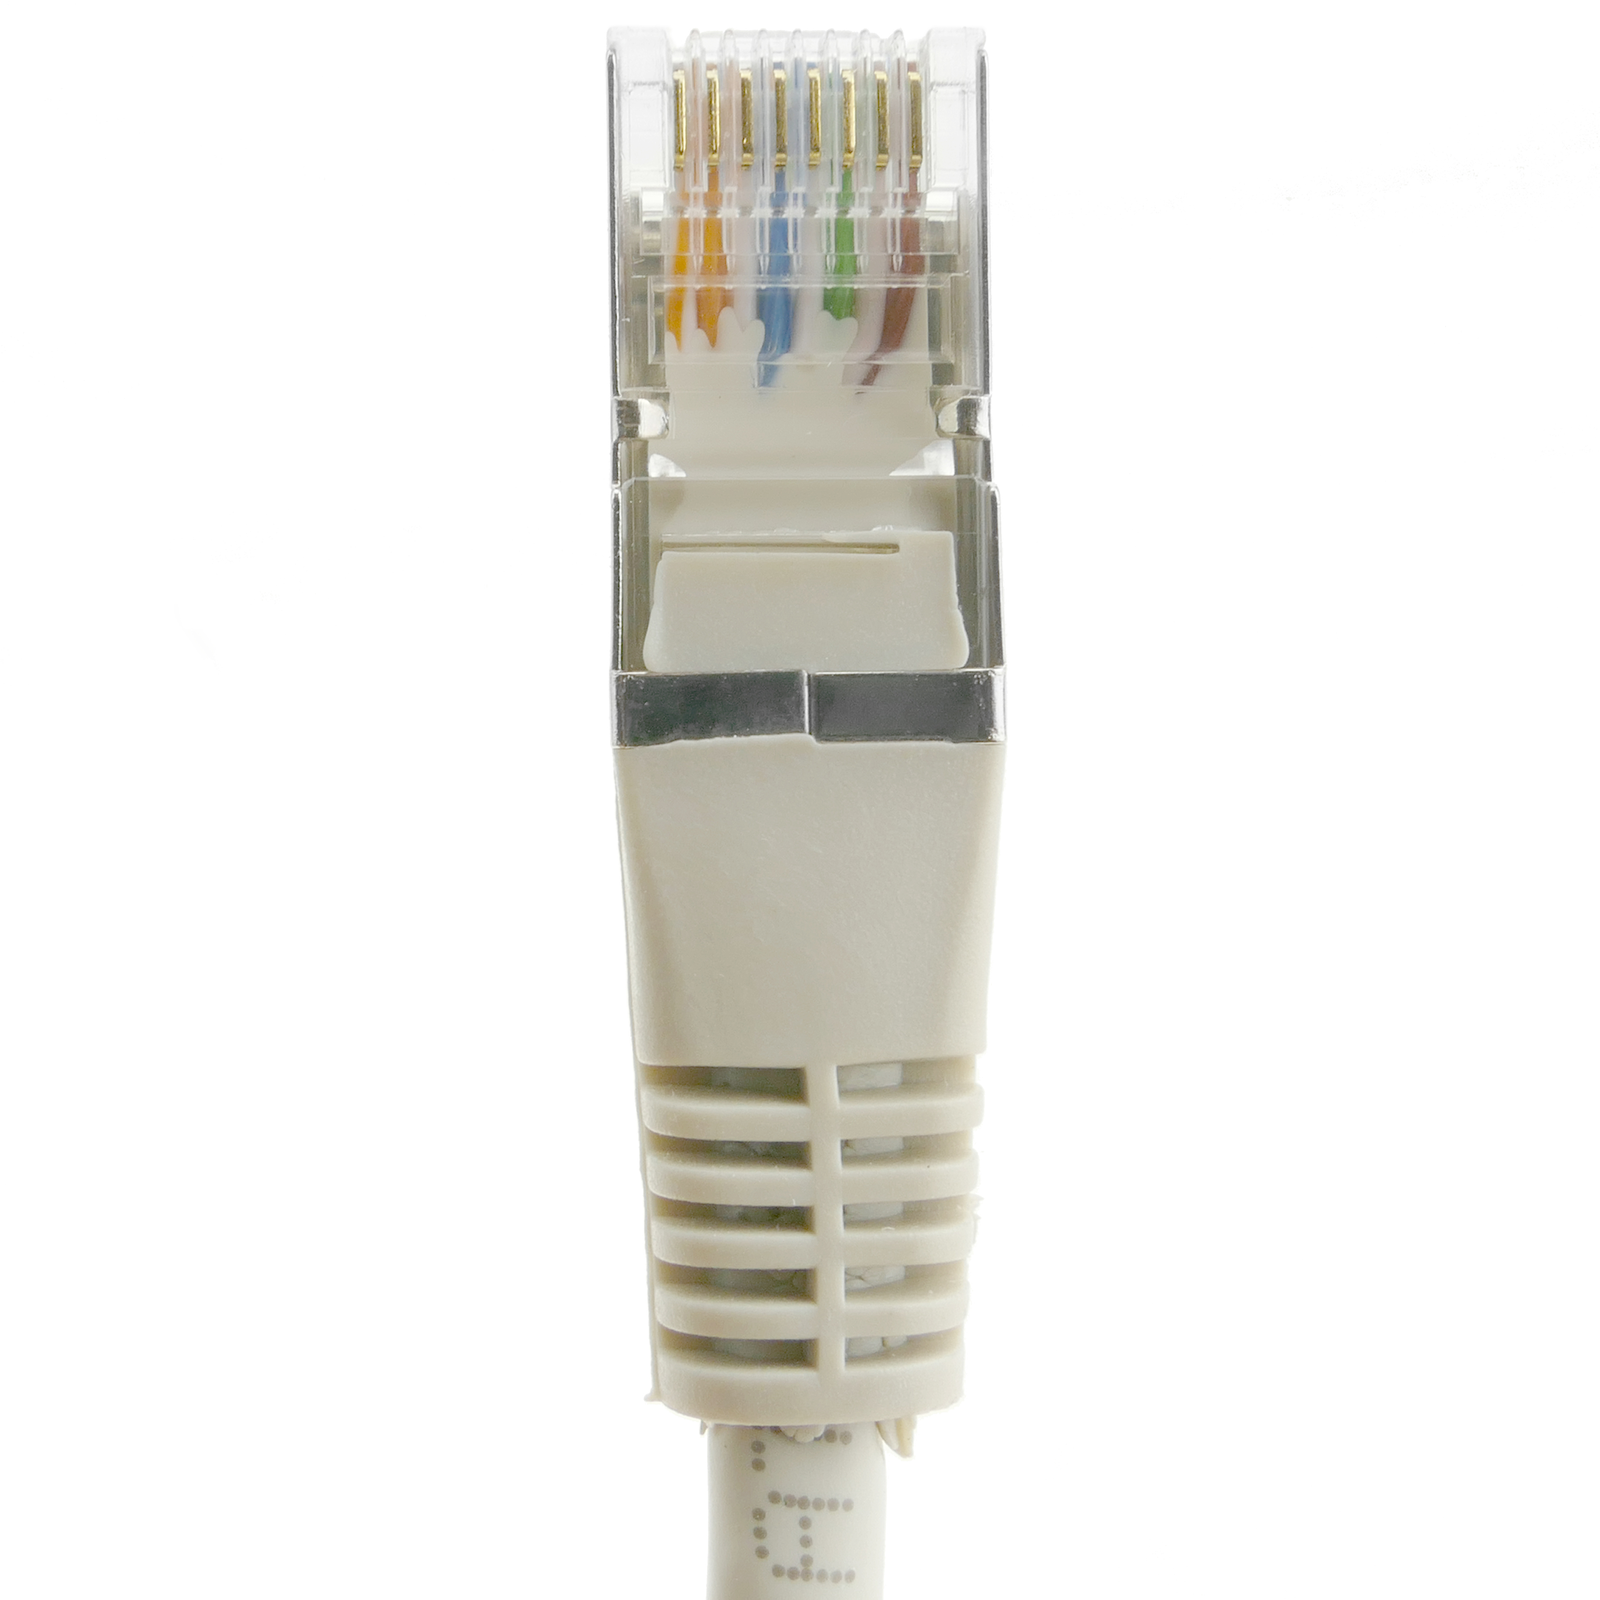 10 X RJ45 cat6 Category 6 Crimpar Ethernet Network Connector Pin